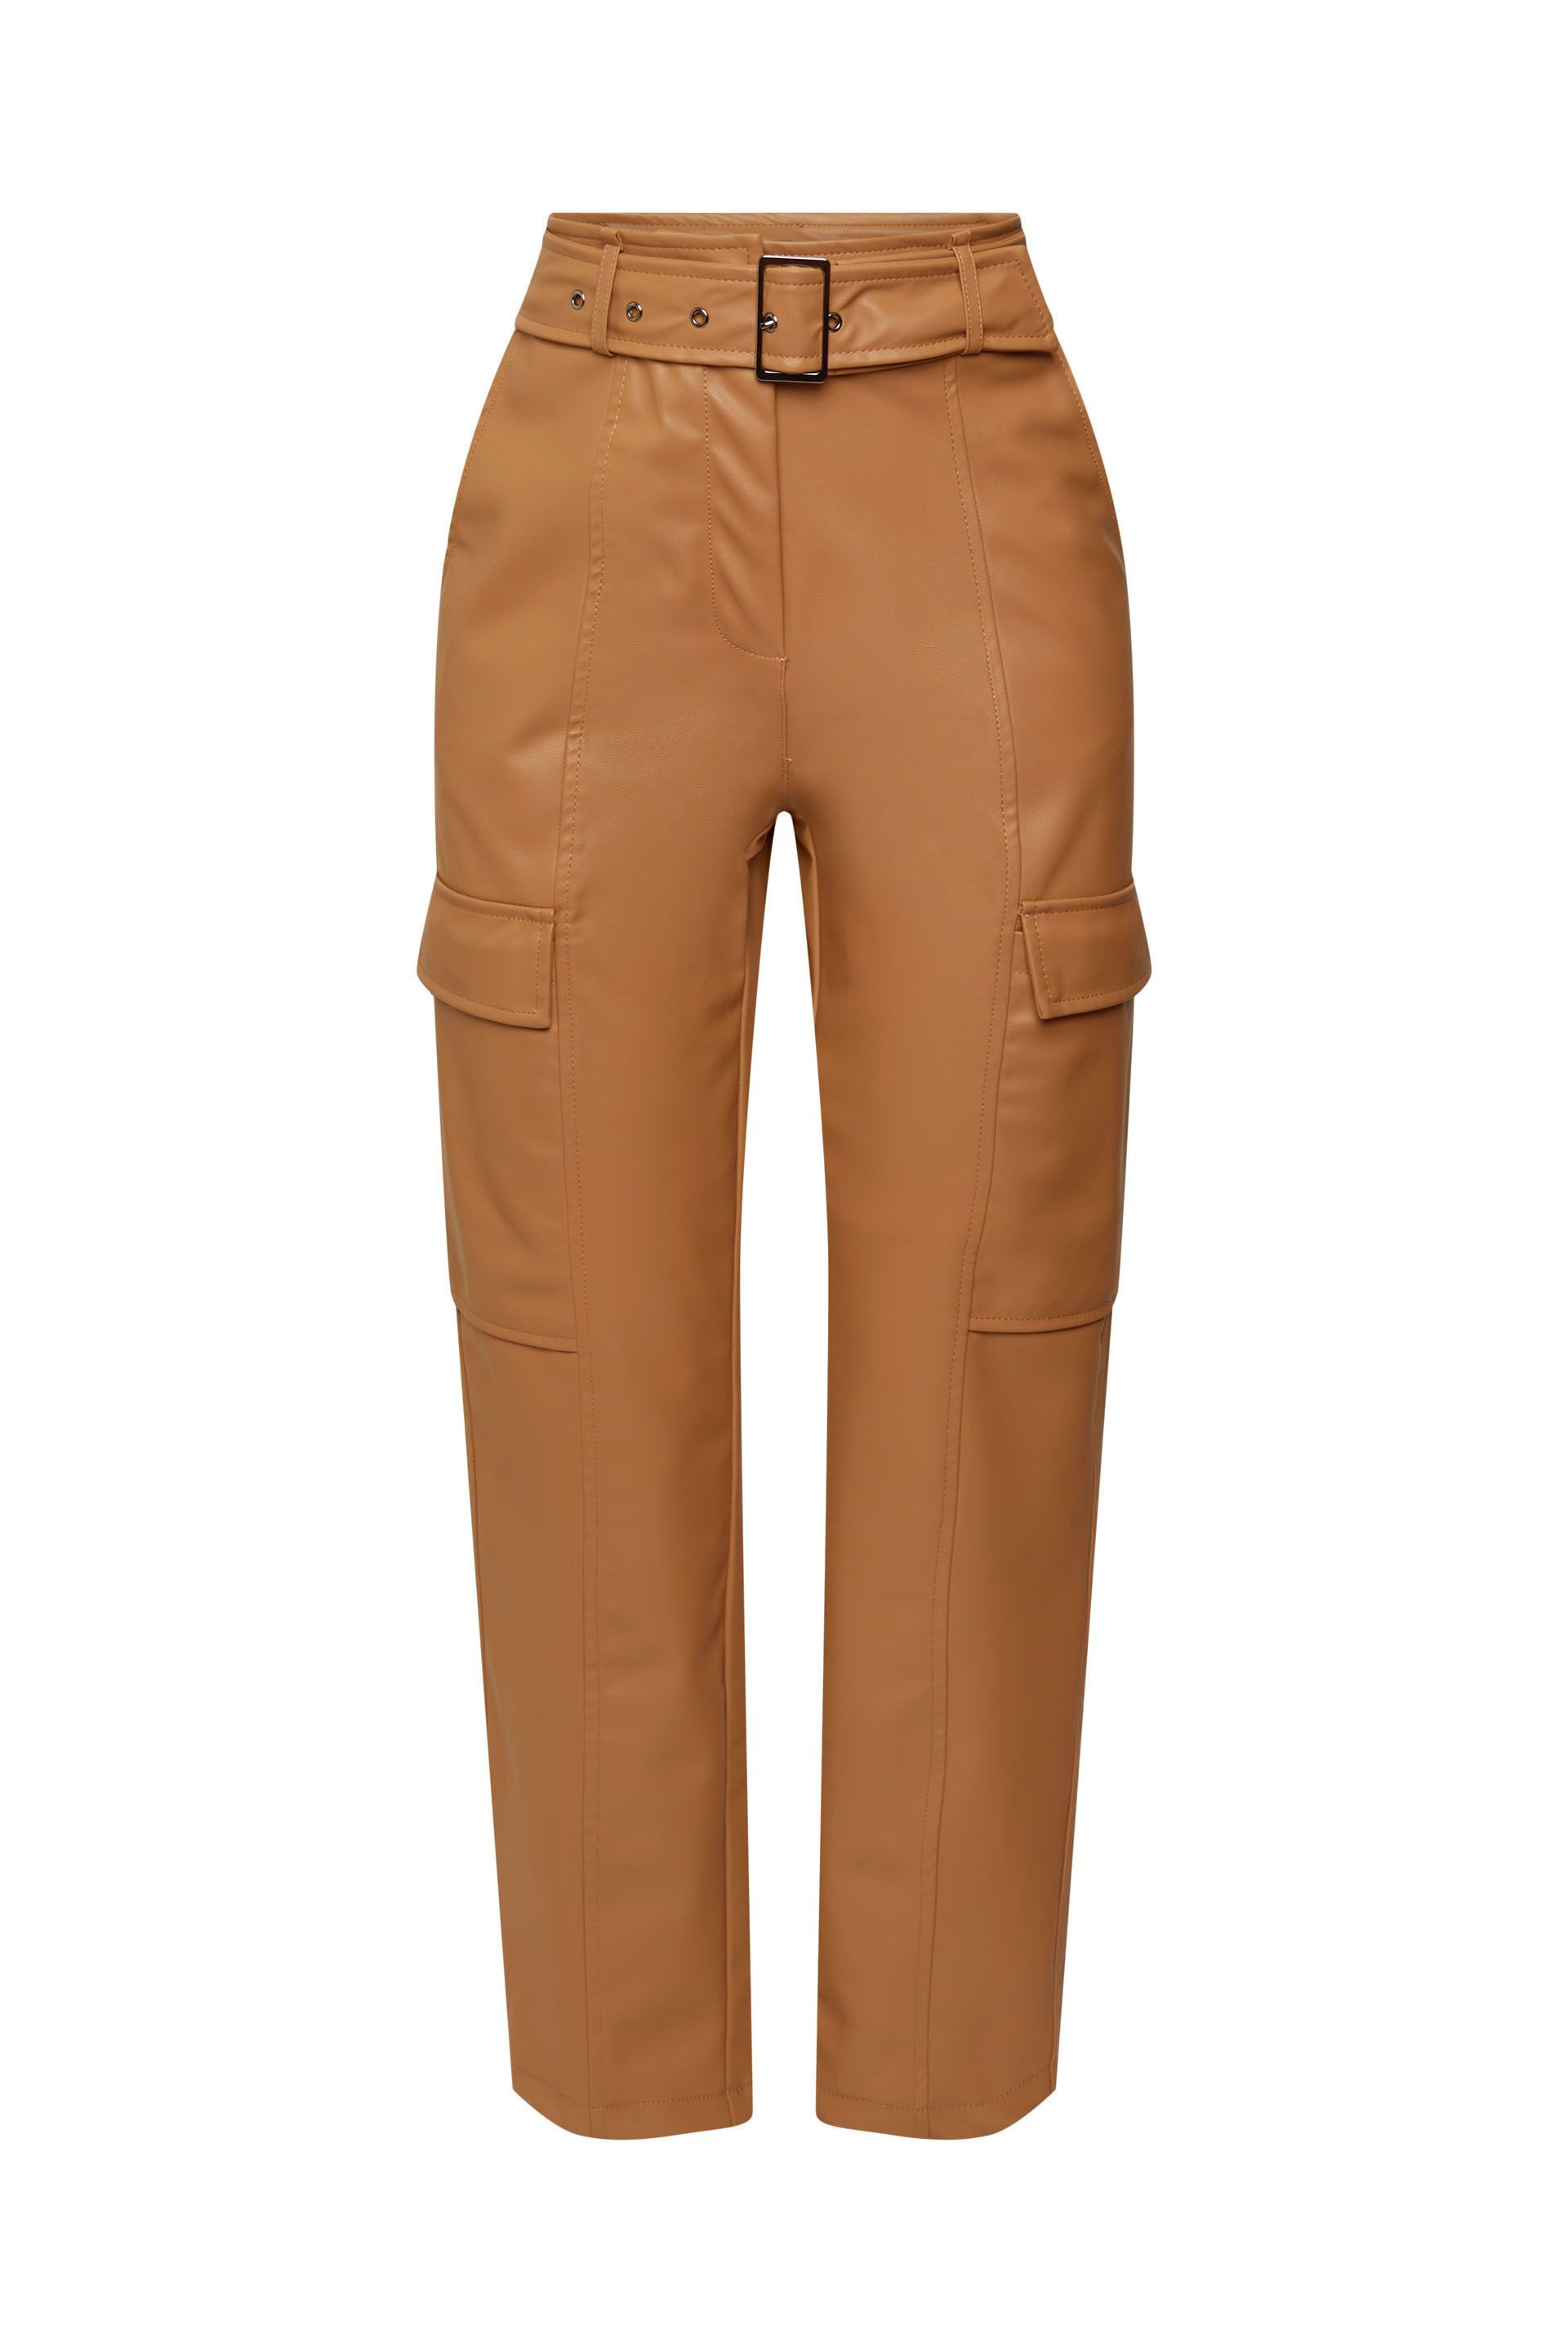 Pantaloni in similpelle con cintura, Marrone chiaro, large image number 0